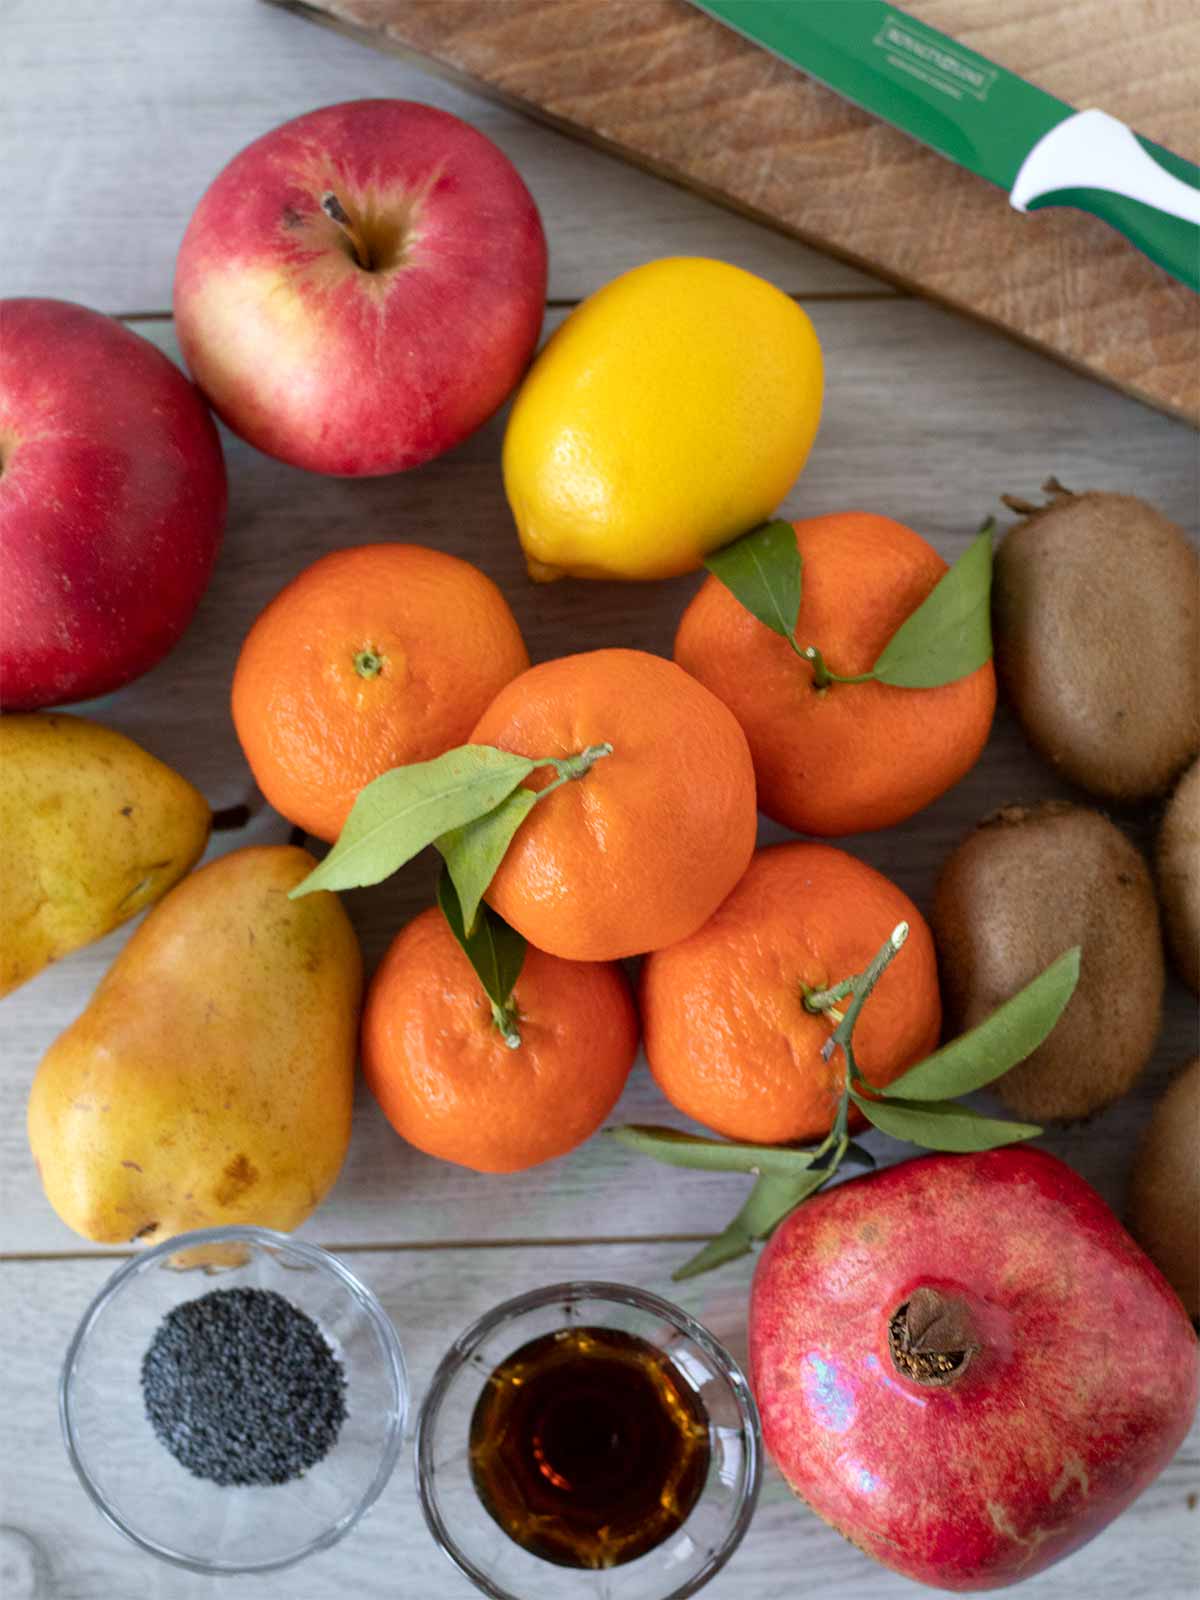 Winter fruit salad ingredients: mandarin oranges, kiwis, apples, pomegranate, pears, lemon, pure maple syrup, and poppy seeds